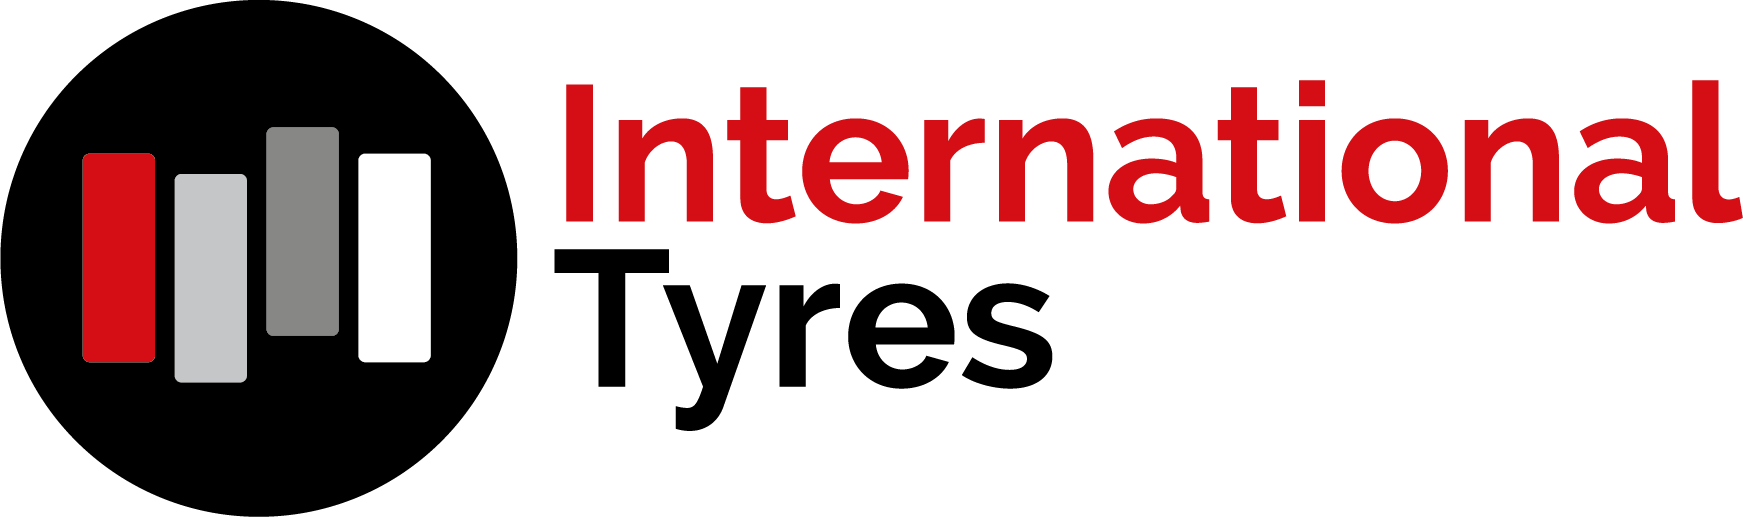 International Tyres logo